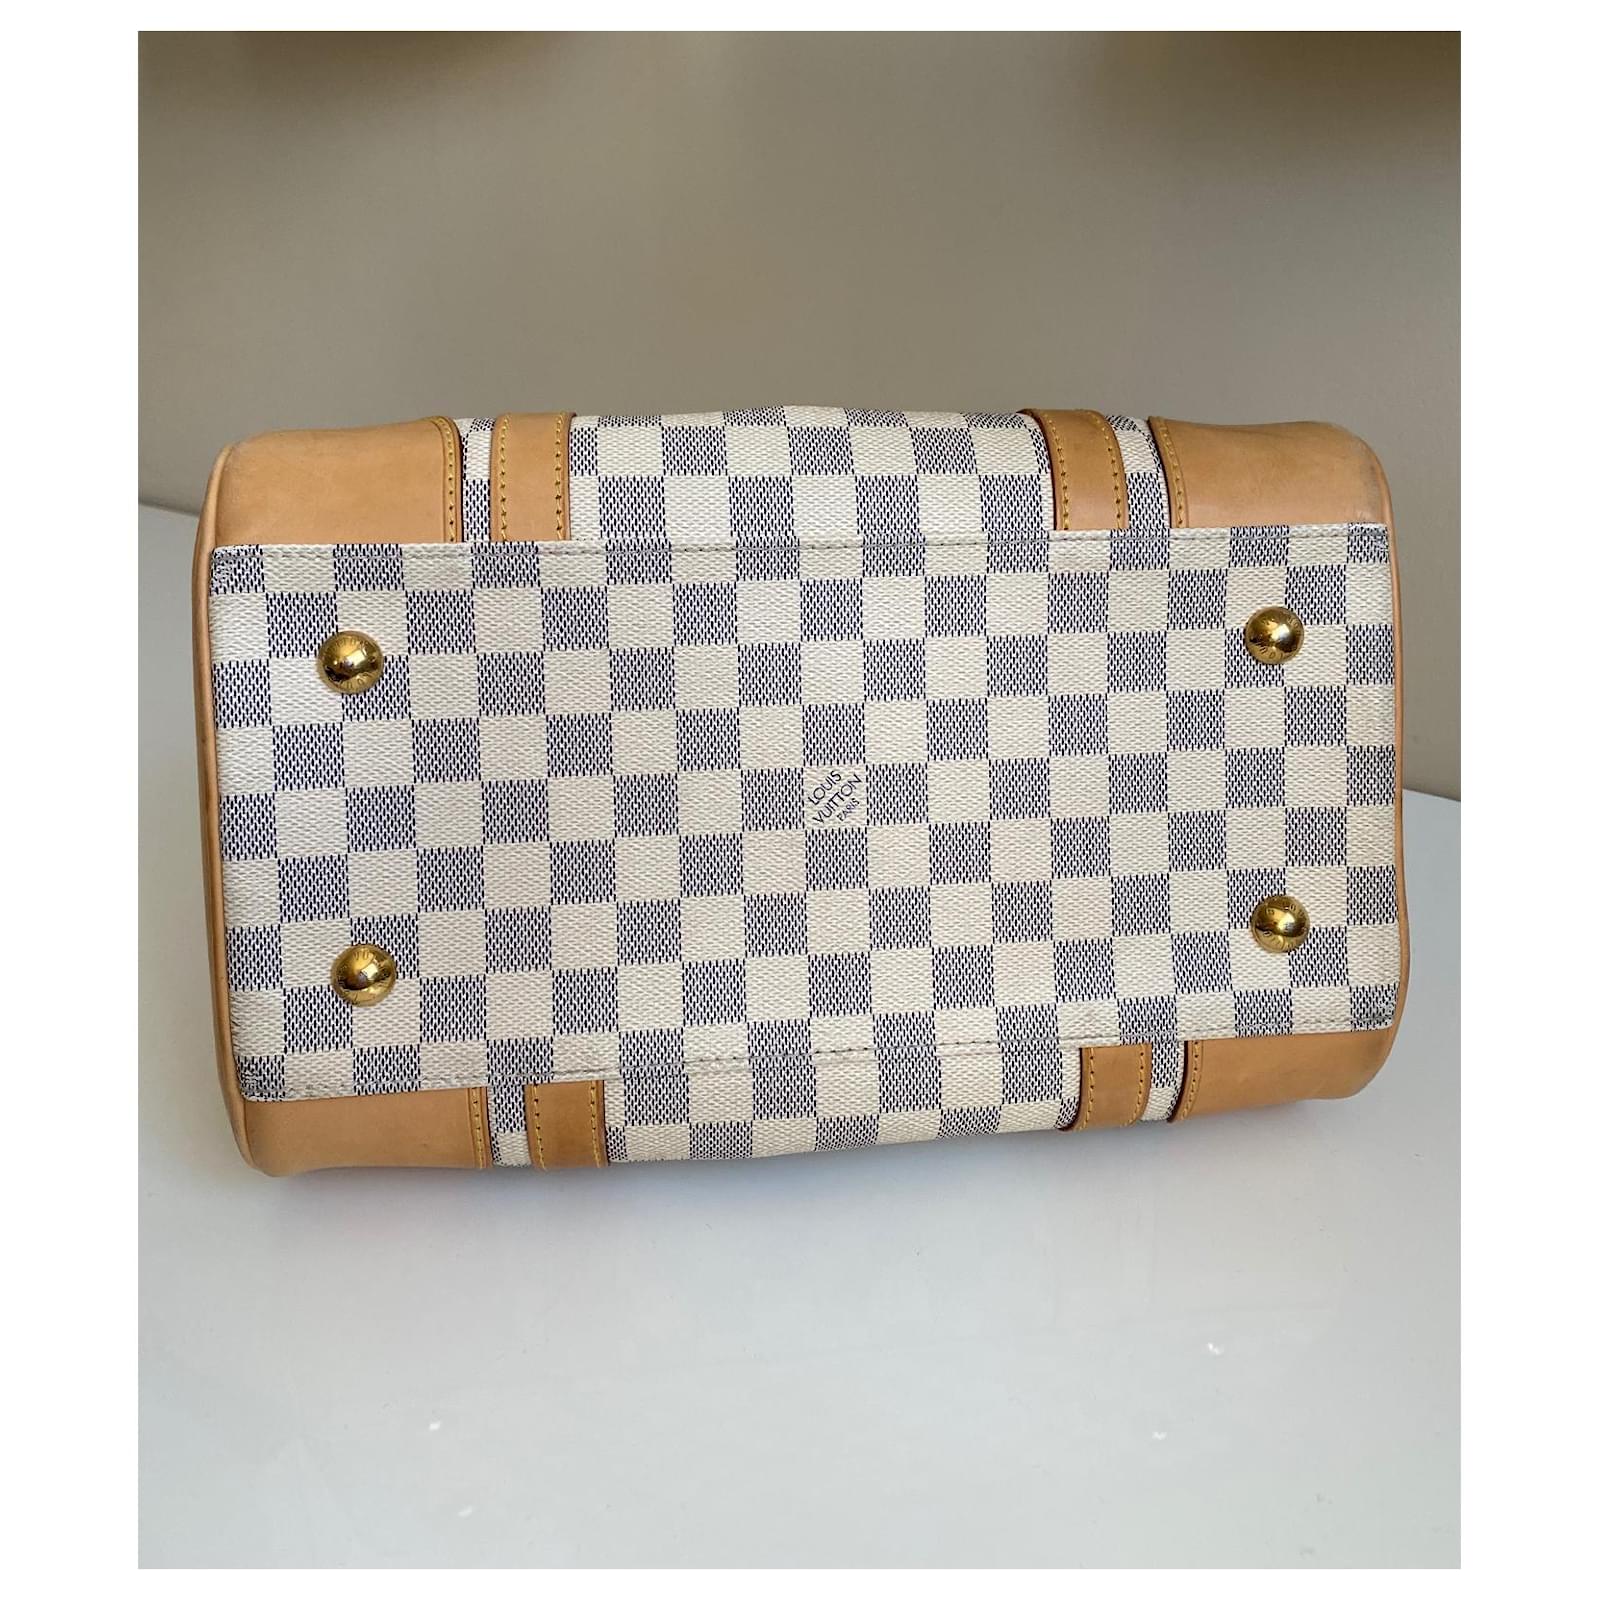 Louis Vuitton Damier Azur Berkeley Hand Bag Tote Bag N52001 White Authentic